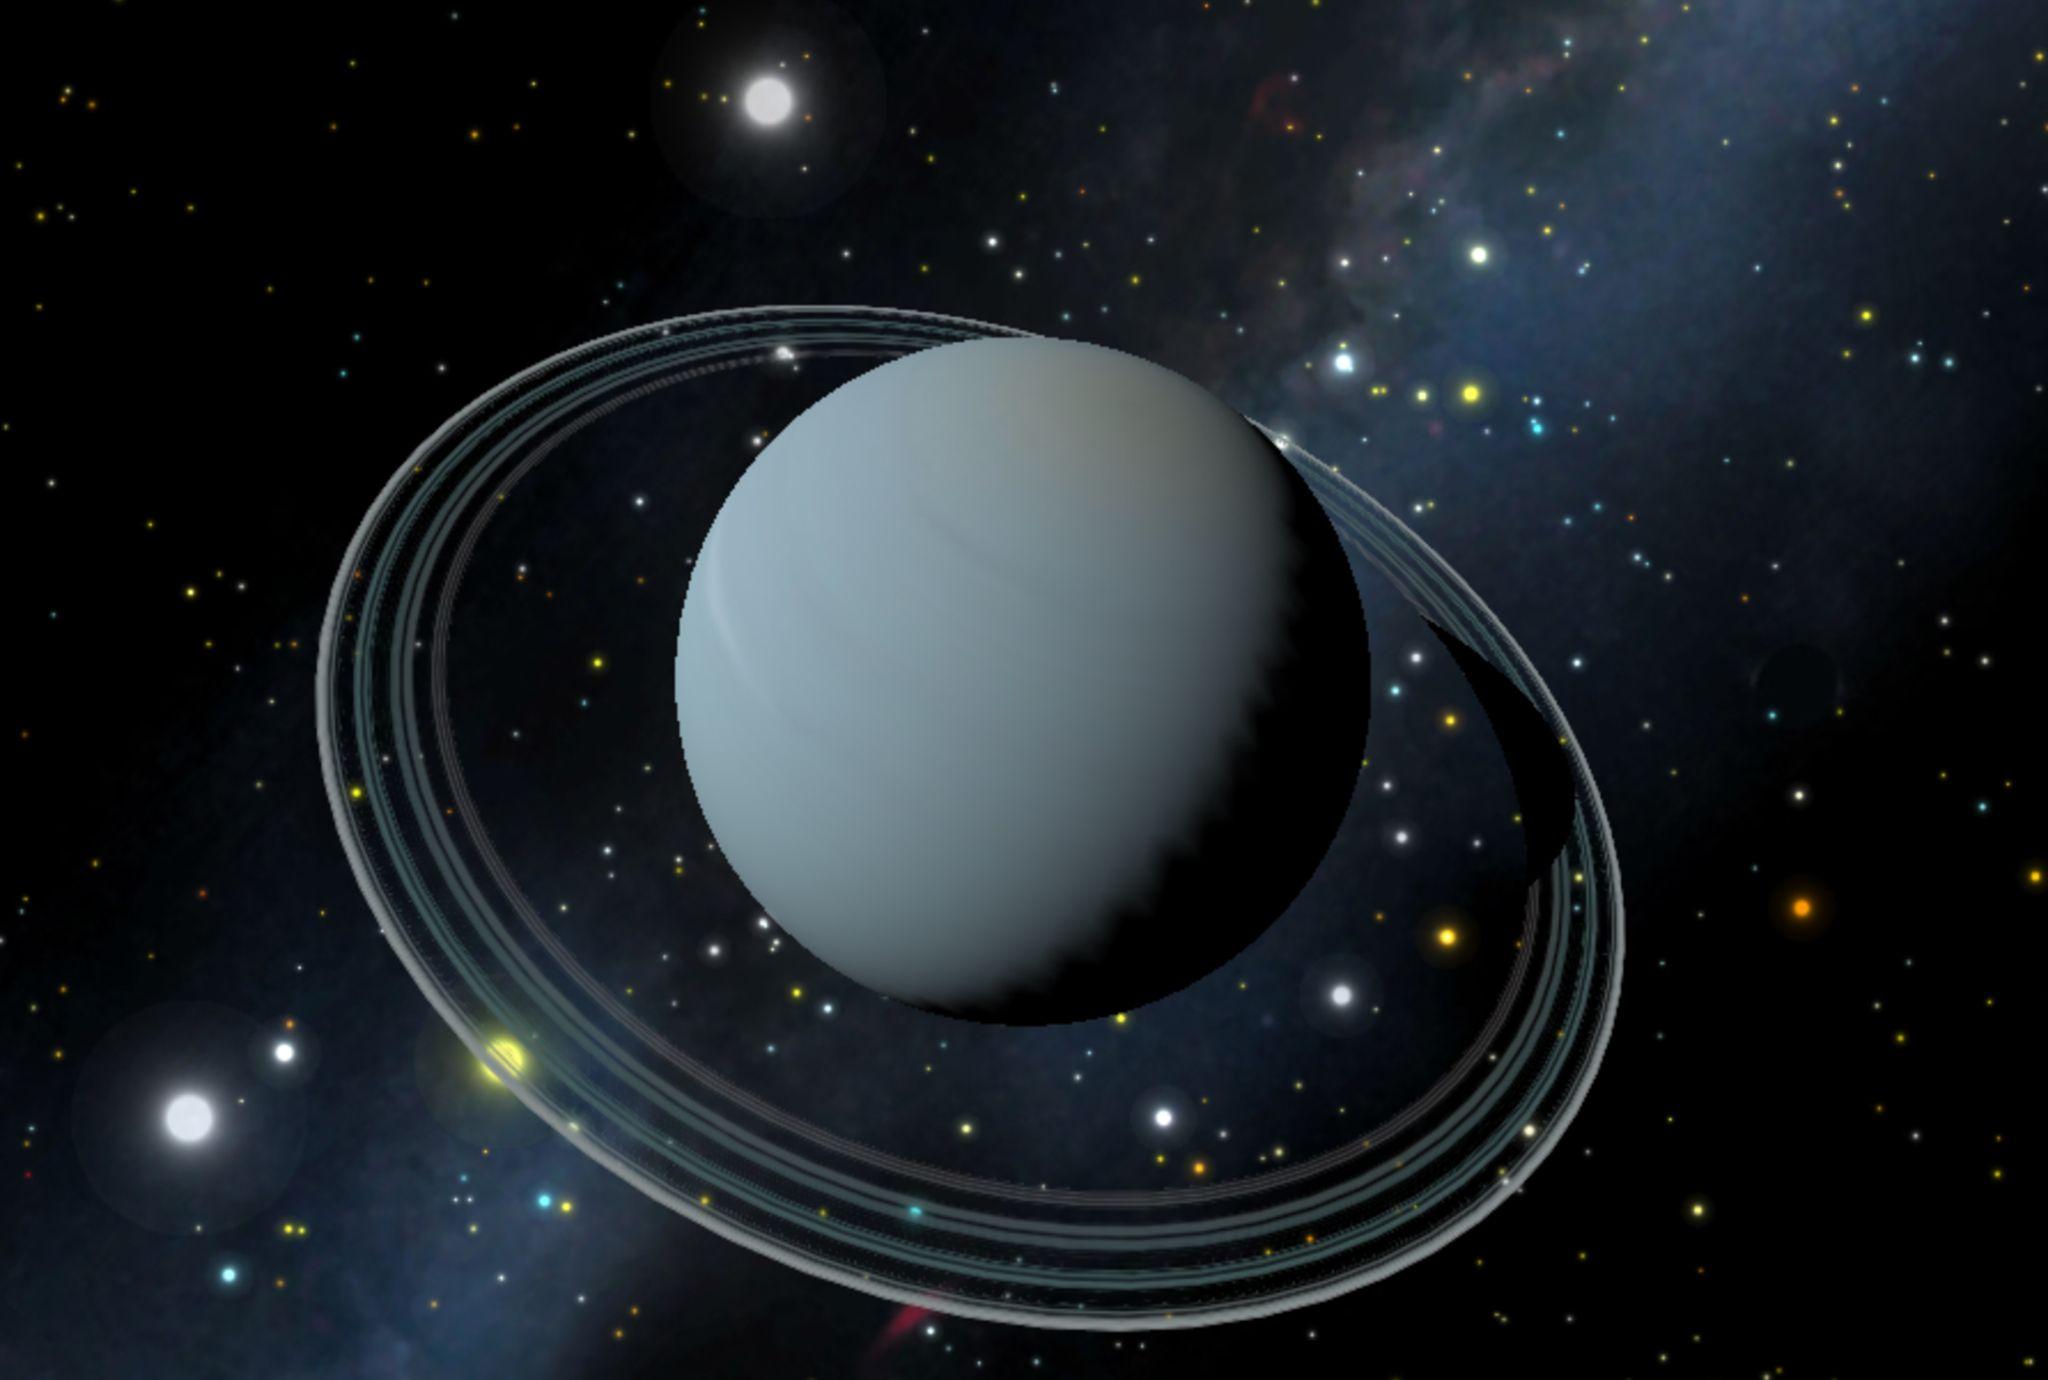 Uranus Information and Facts